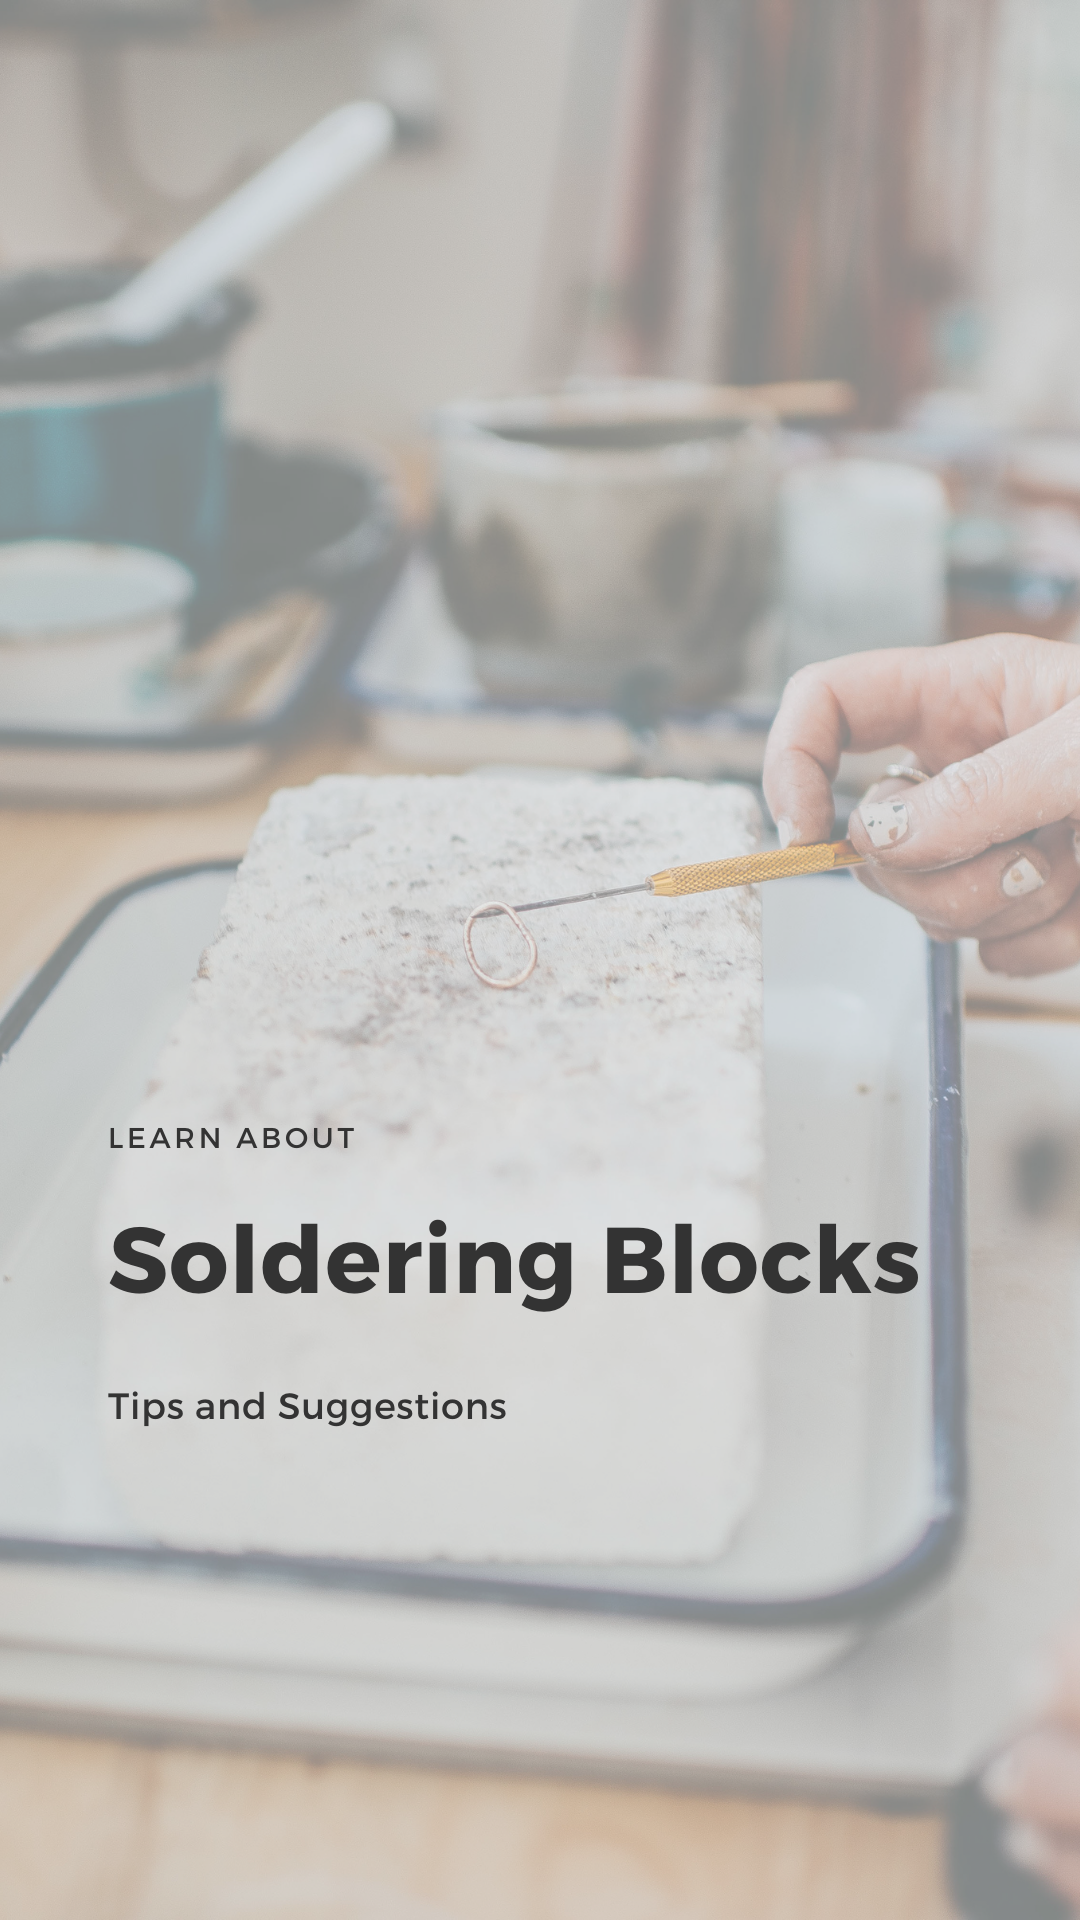 Getting Started Soldering - Soldering Blocks